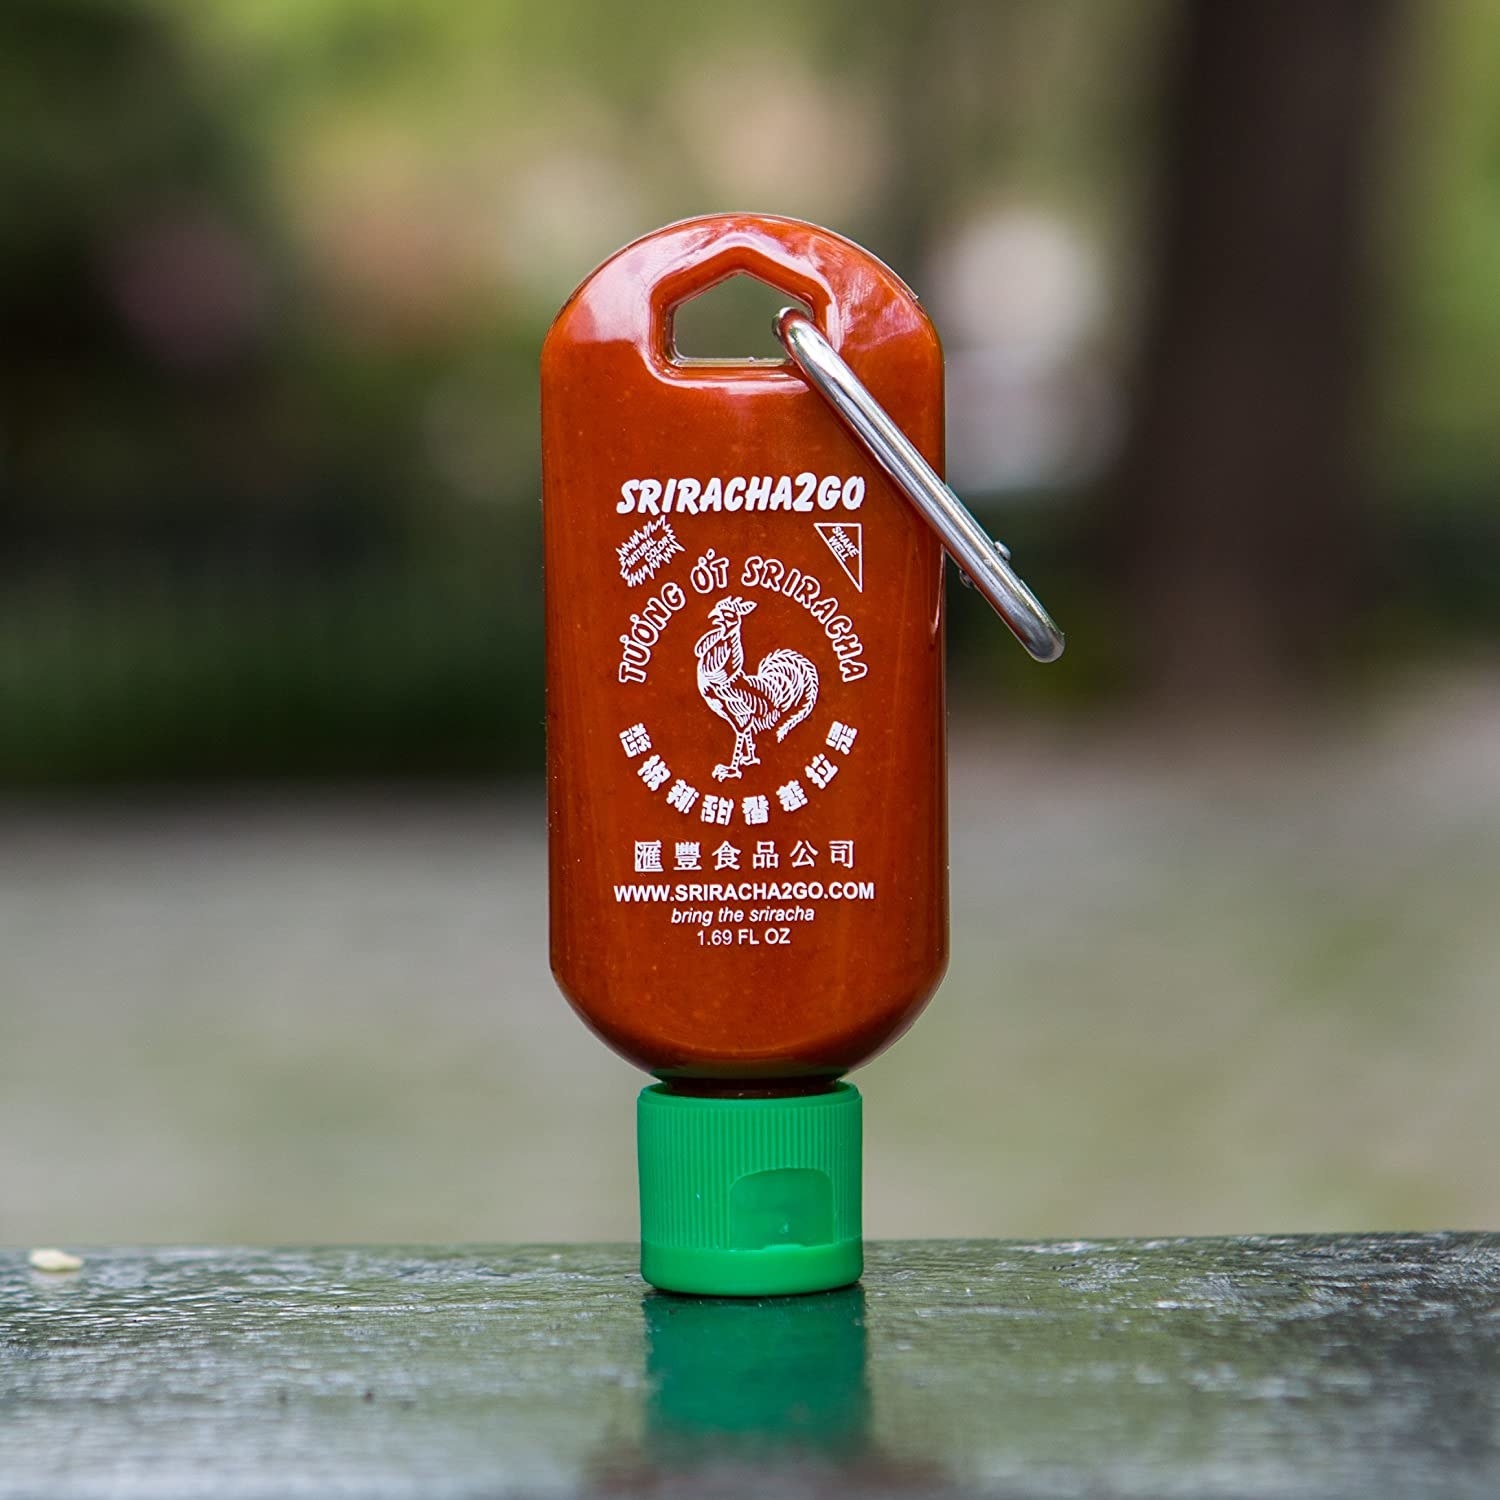 keychain bottle of Sriracha